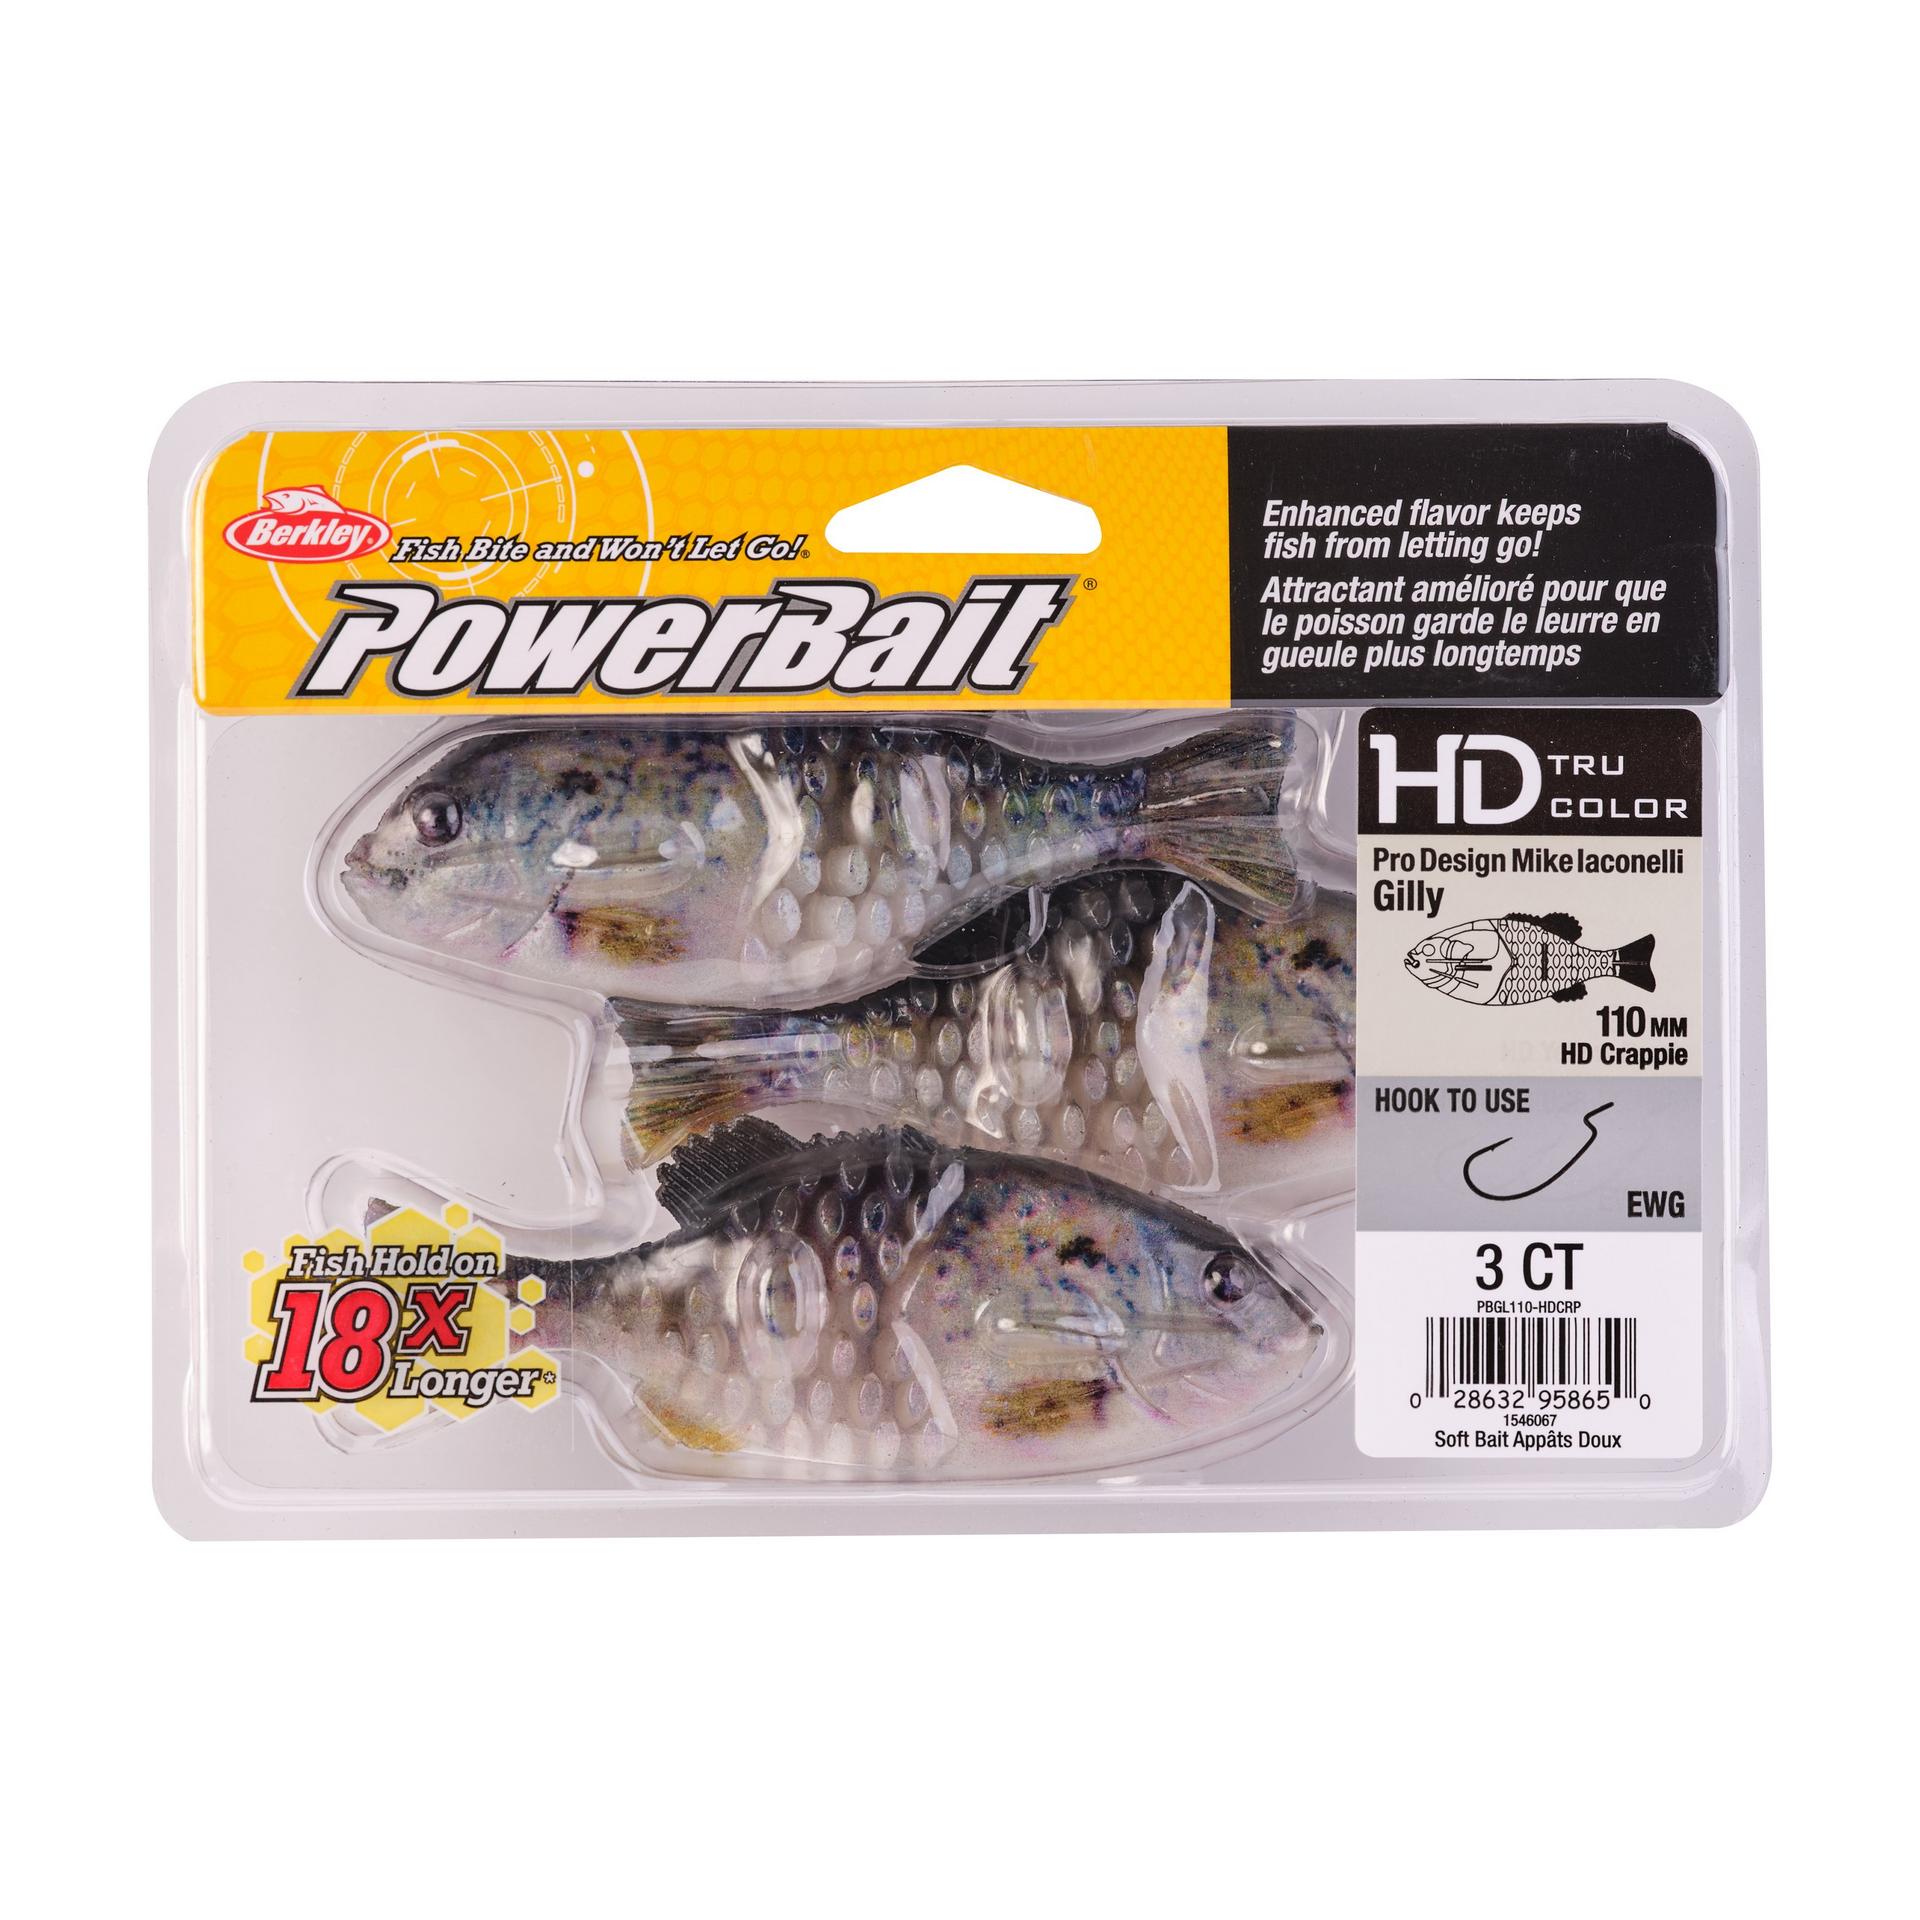 PowerBaitGilly HDCrappie 110mm PKG | Berkley Fishing